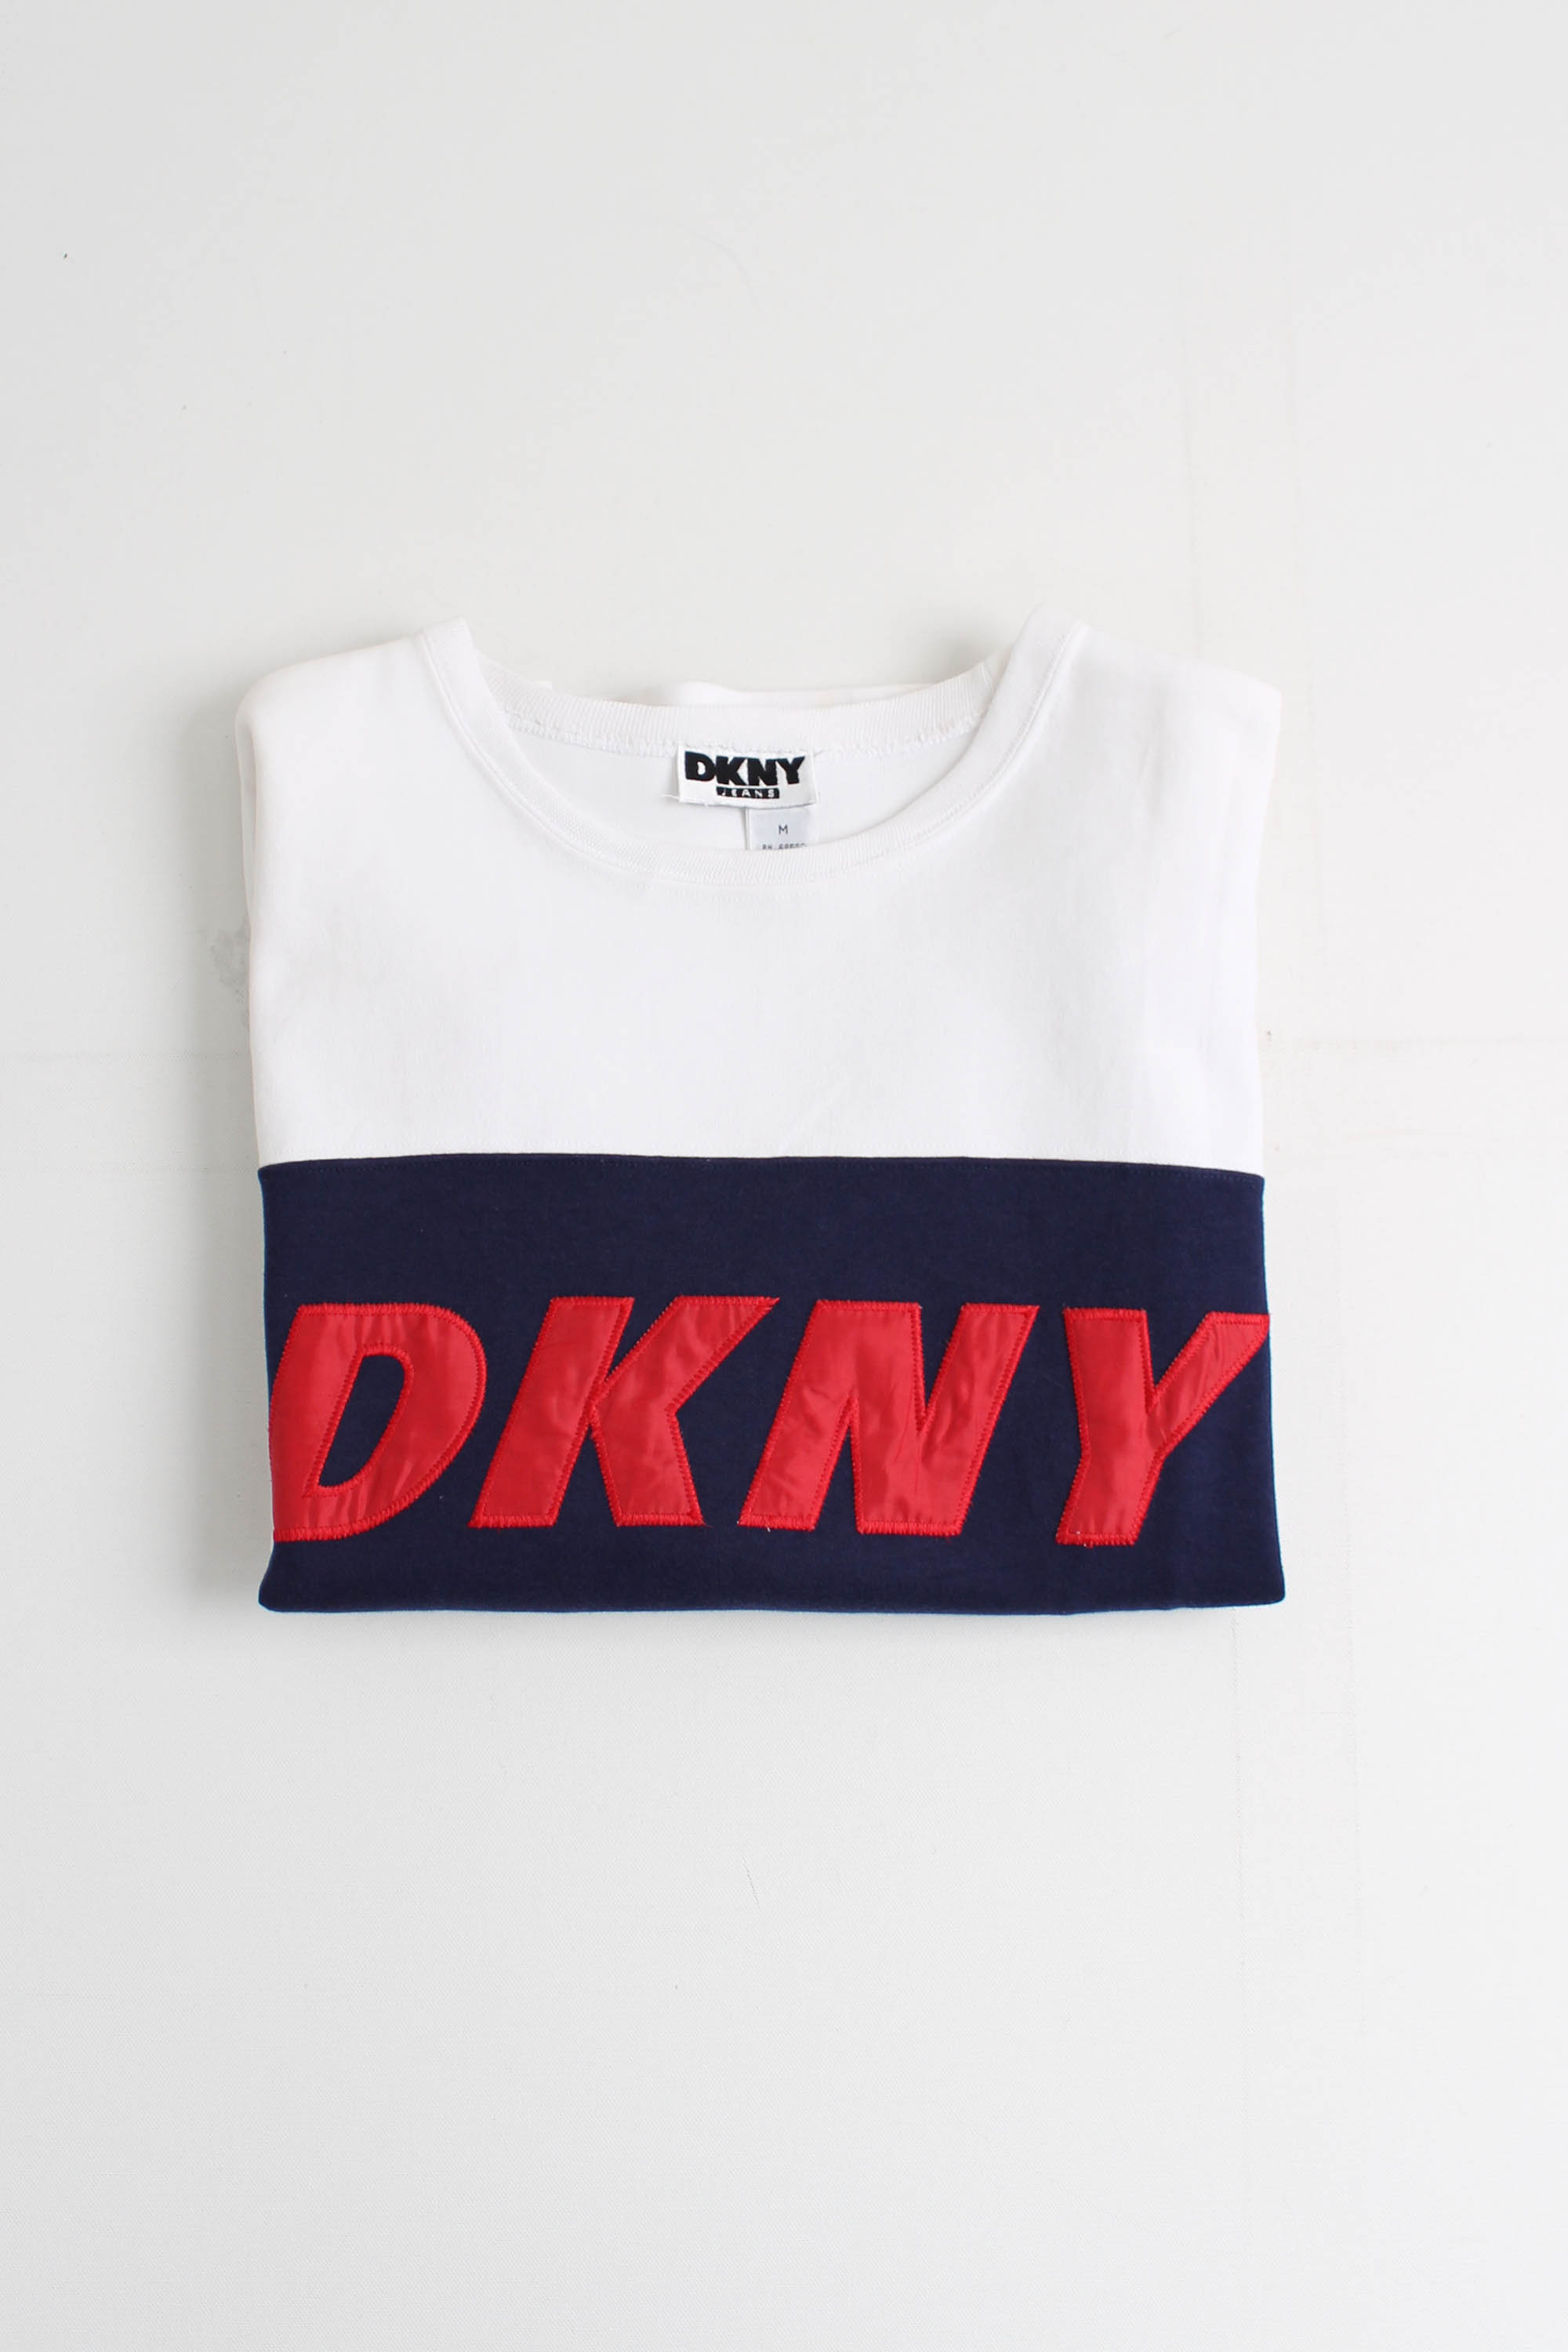 vintage DKNY